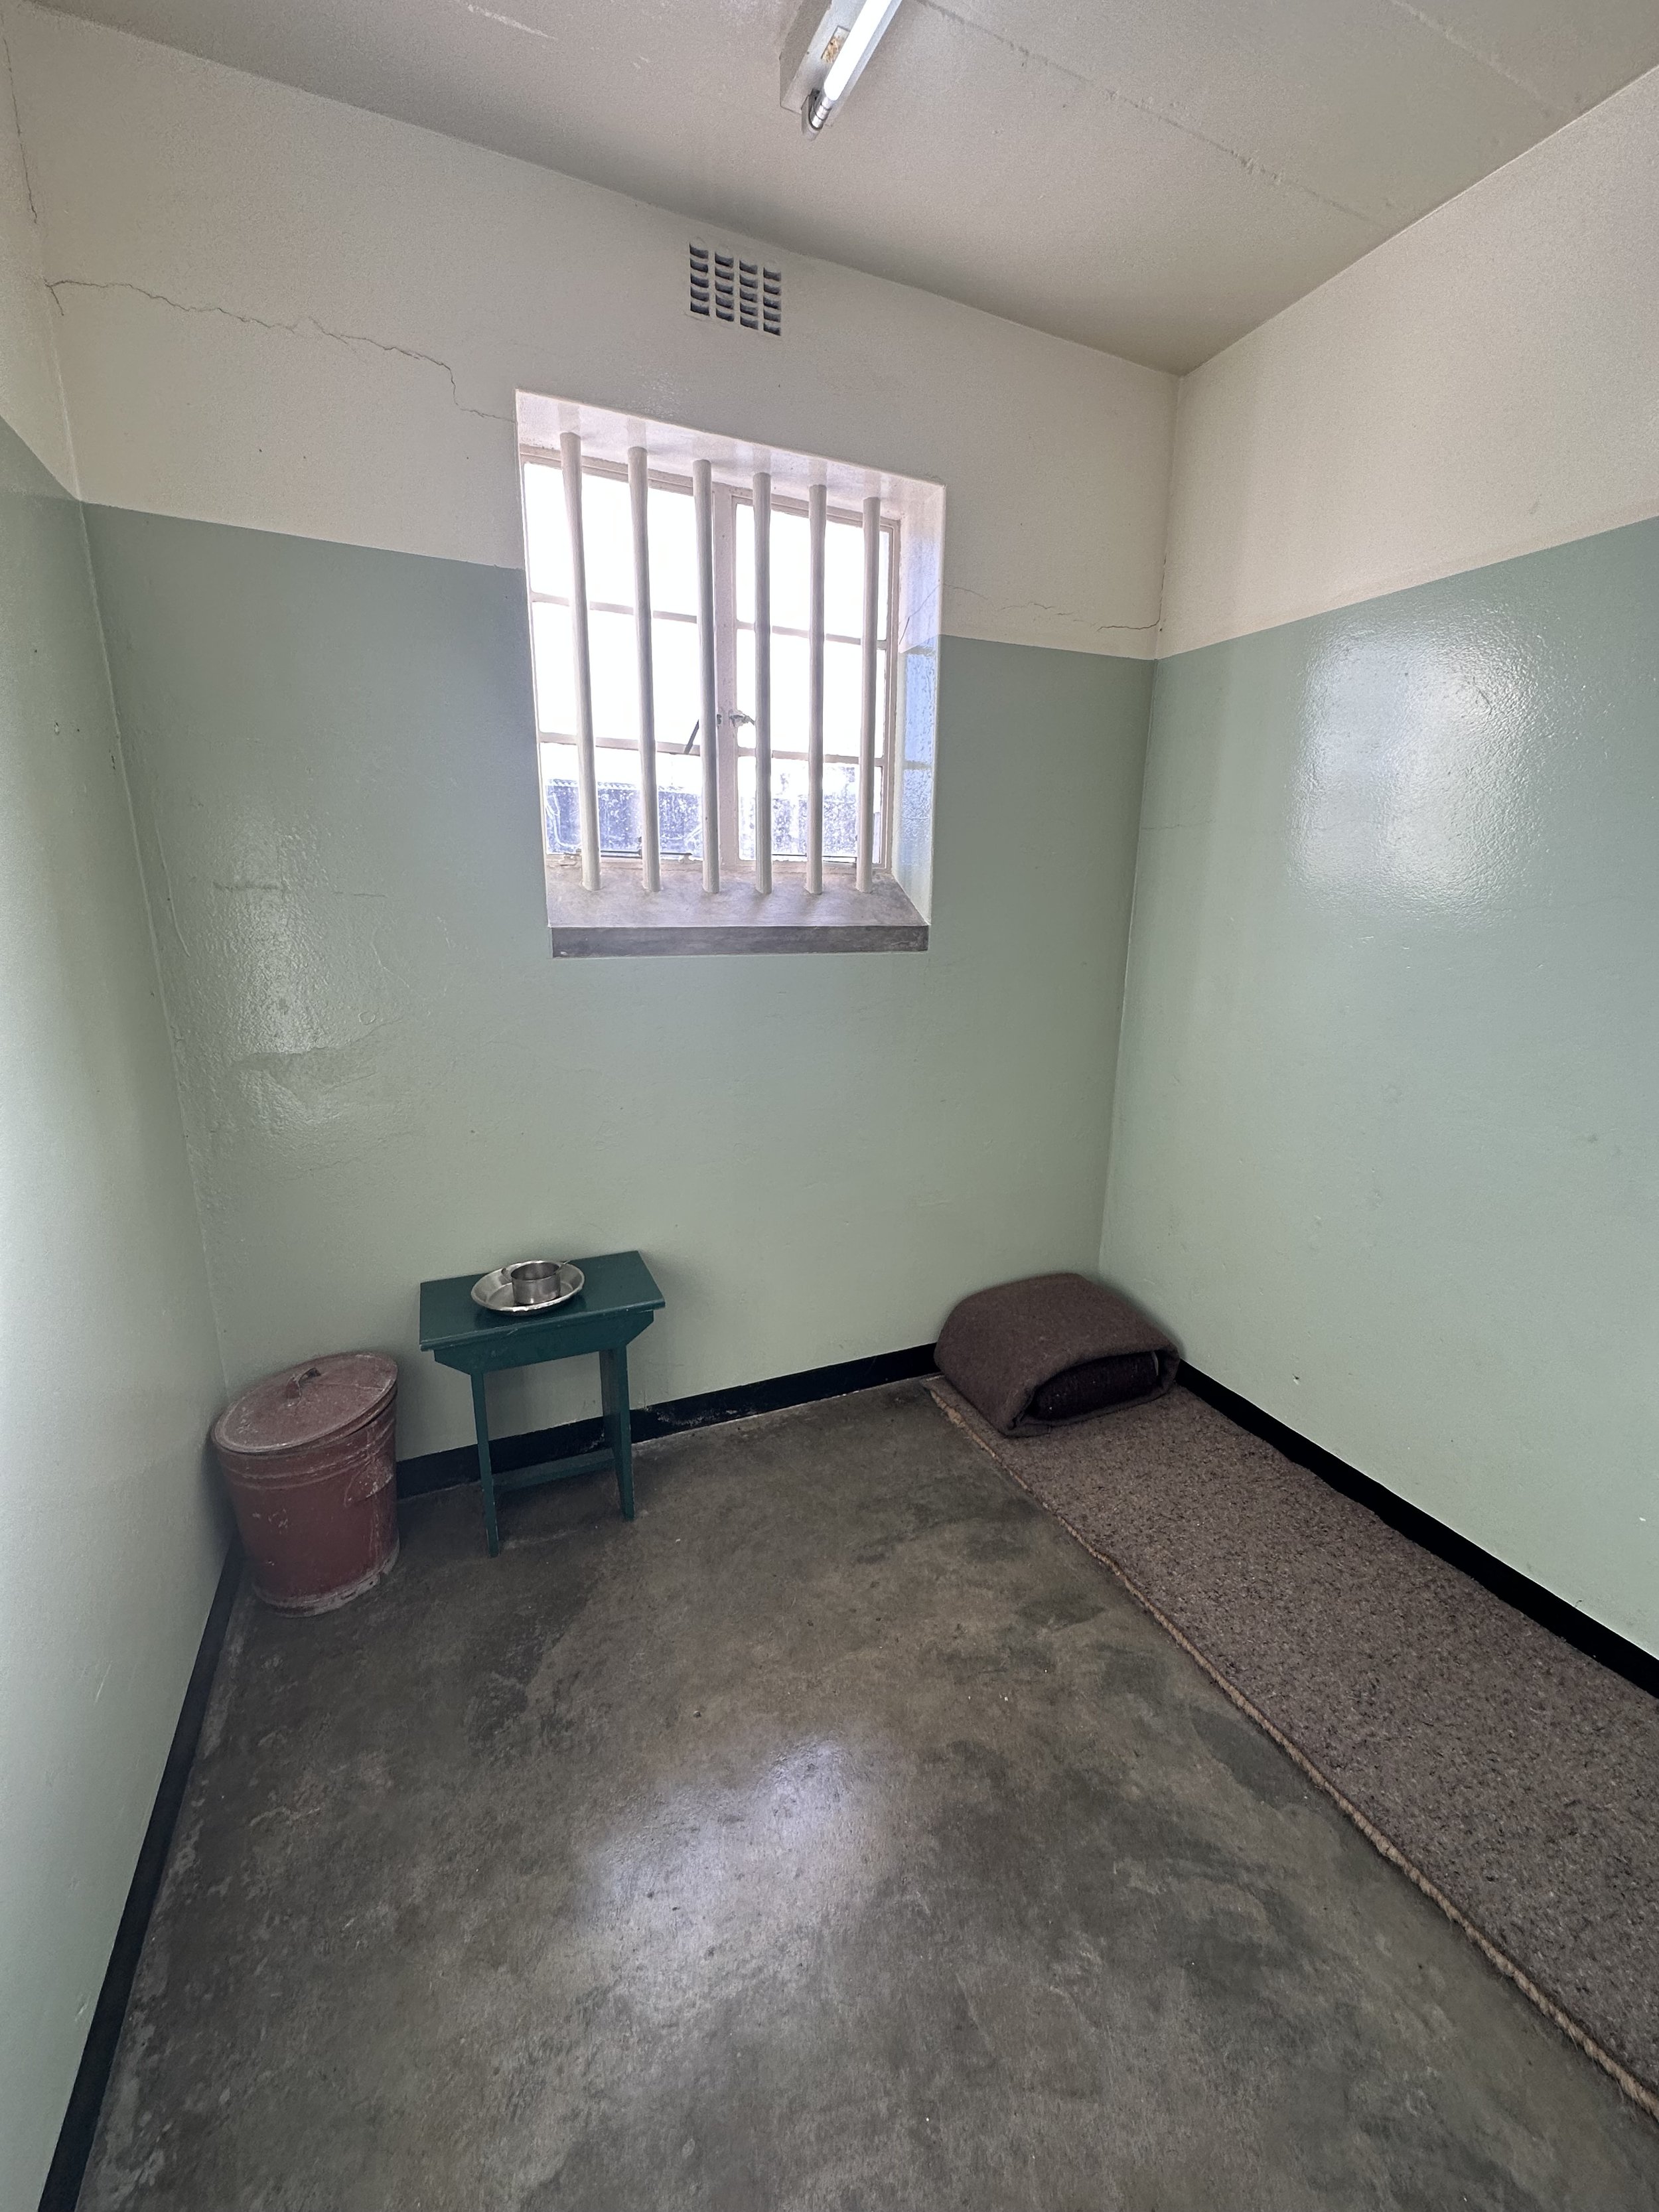 Nelson Mandelas Cell Robben Island Museum.jpeg